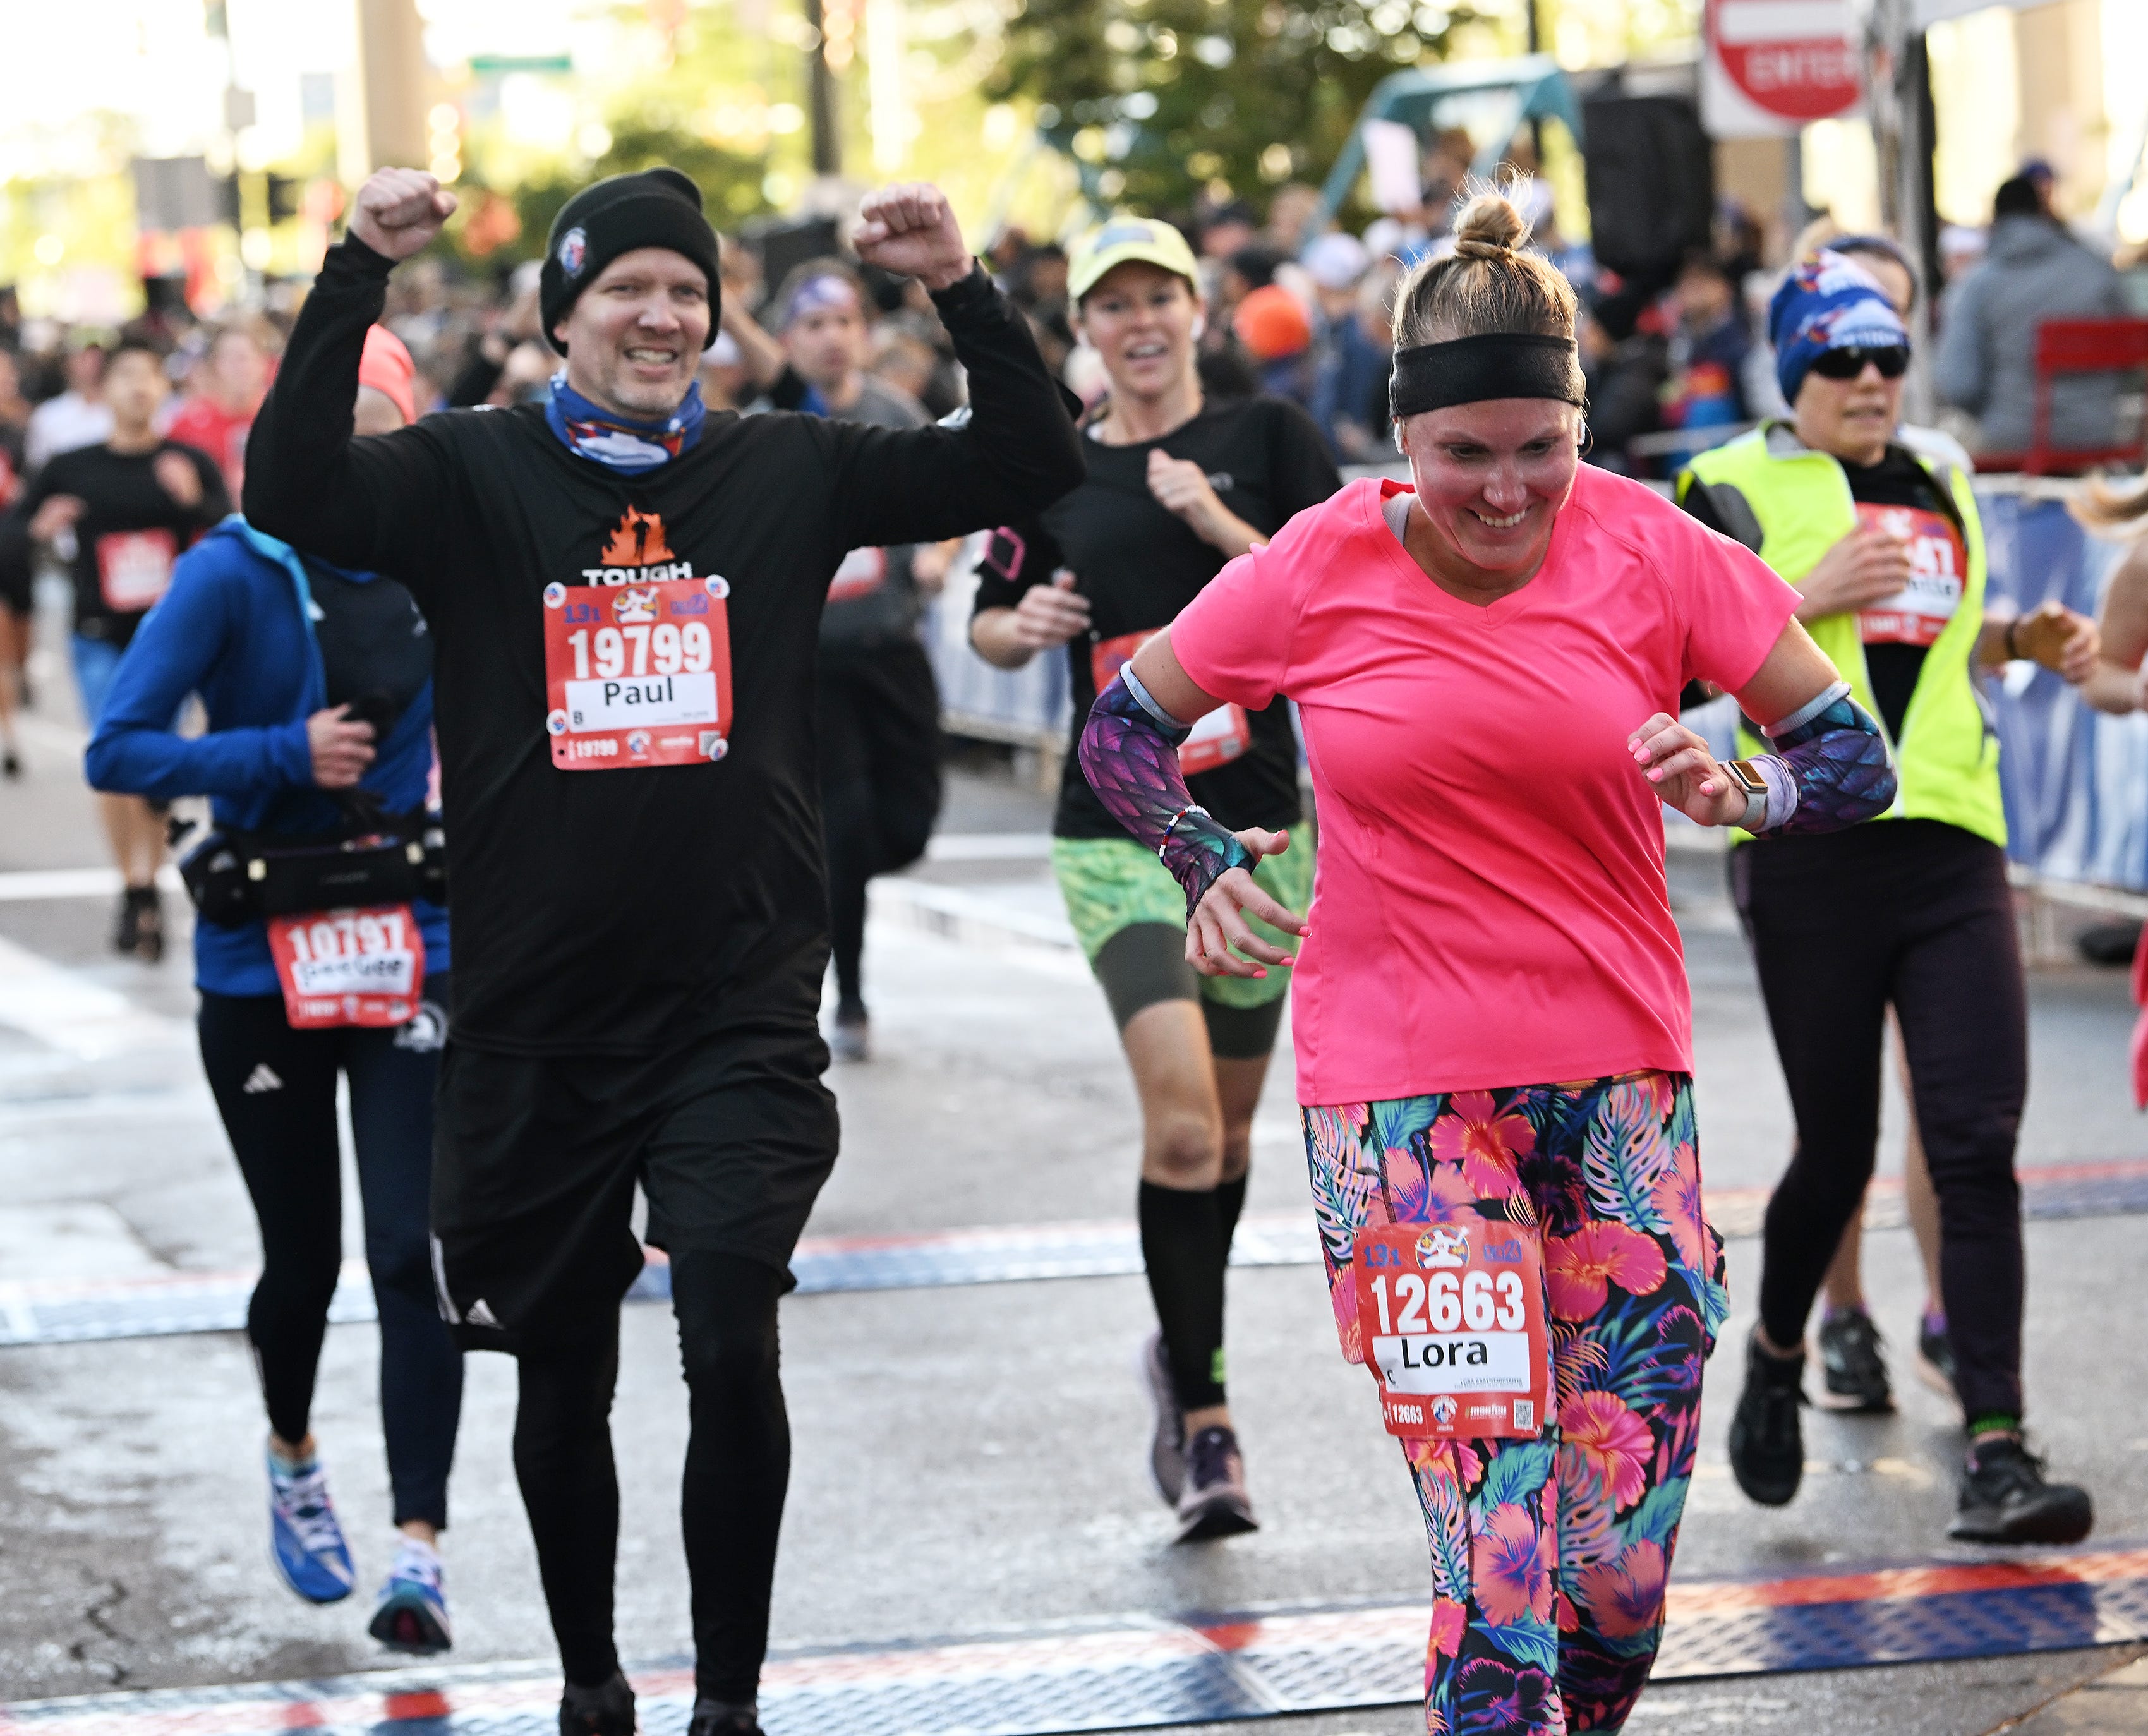 From left, Paul Steepe, 51, of Clinton Township and Lora Graentzdoerffer, 42, of Novi react as they finish the half marathon.